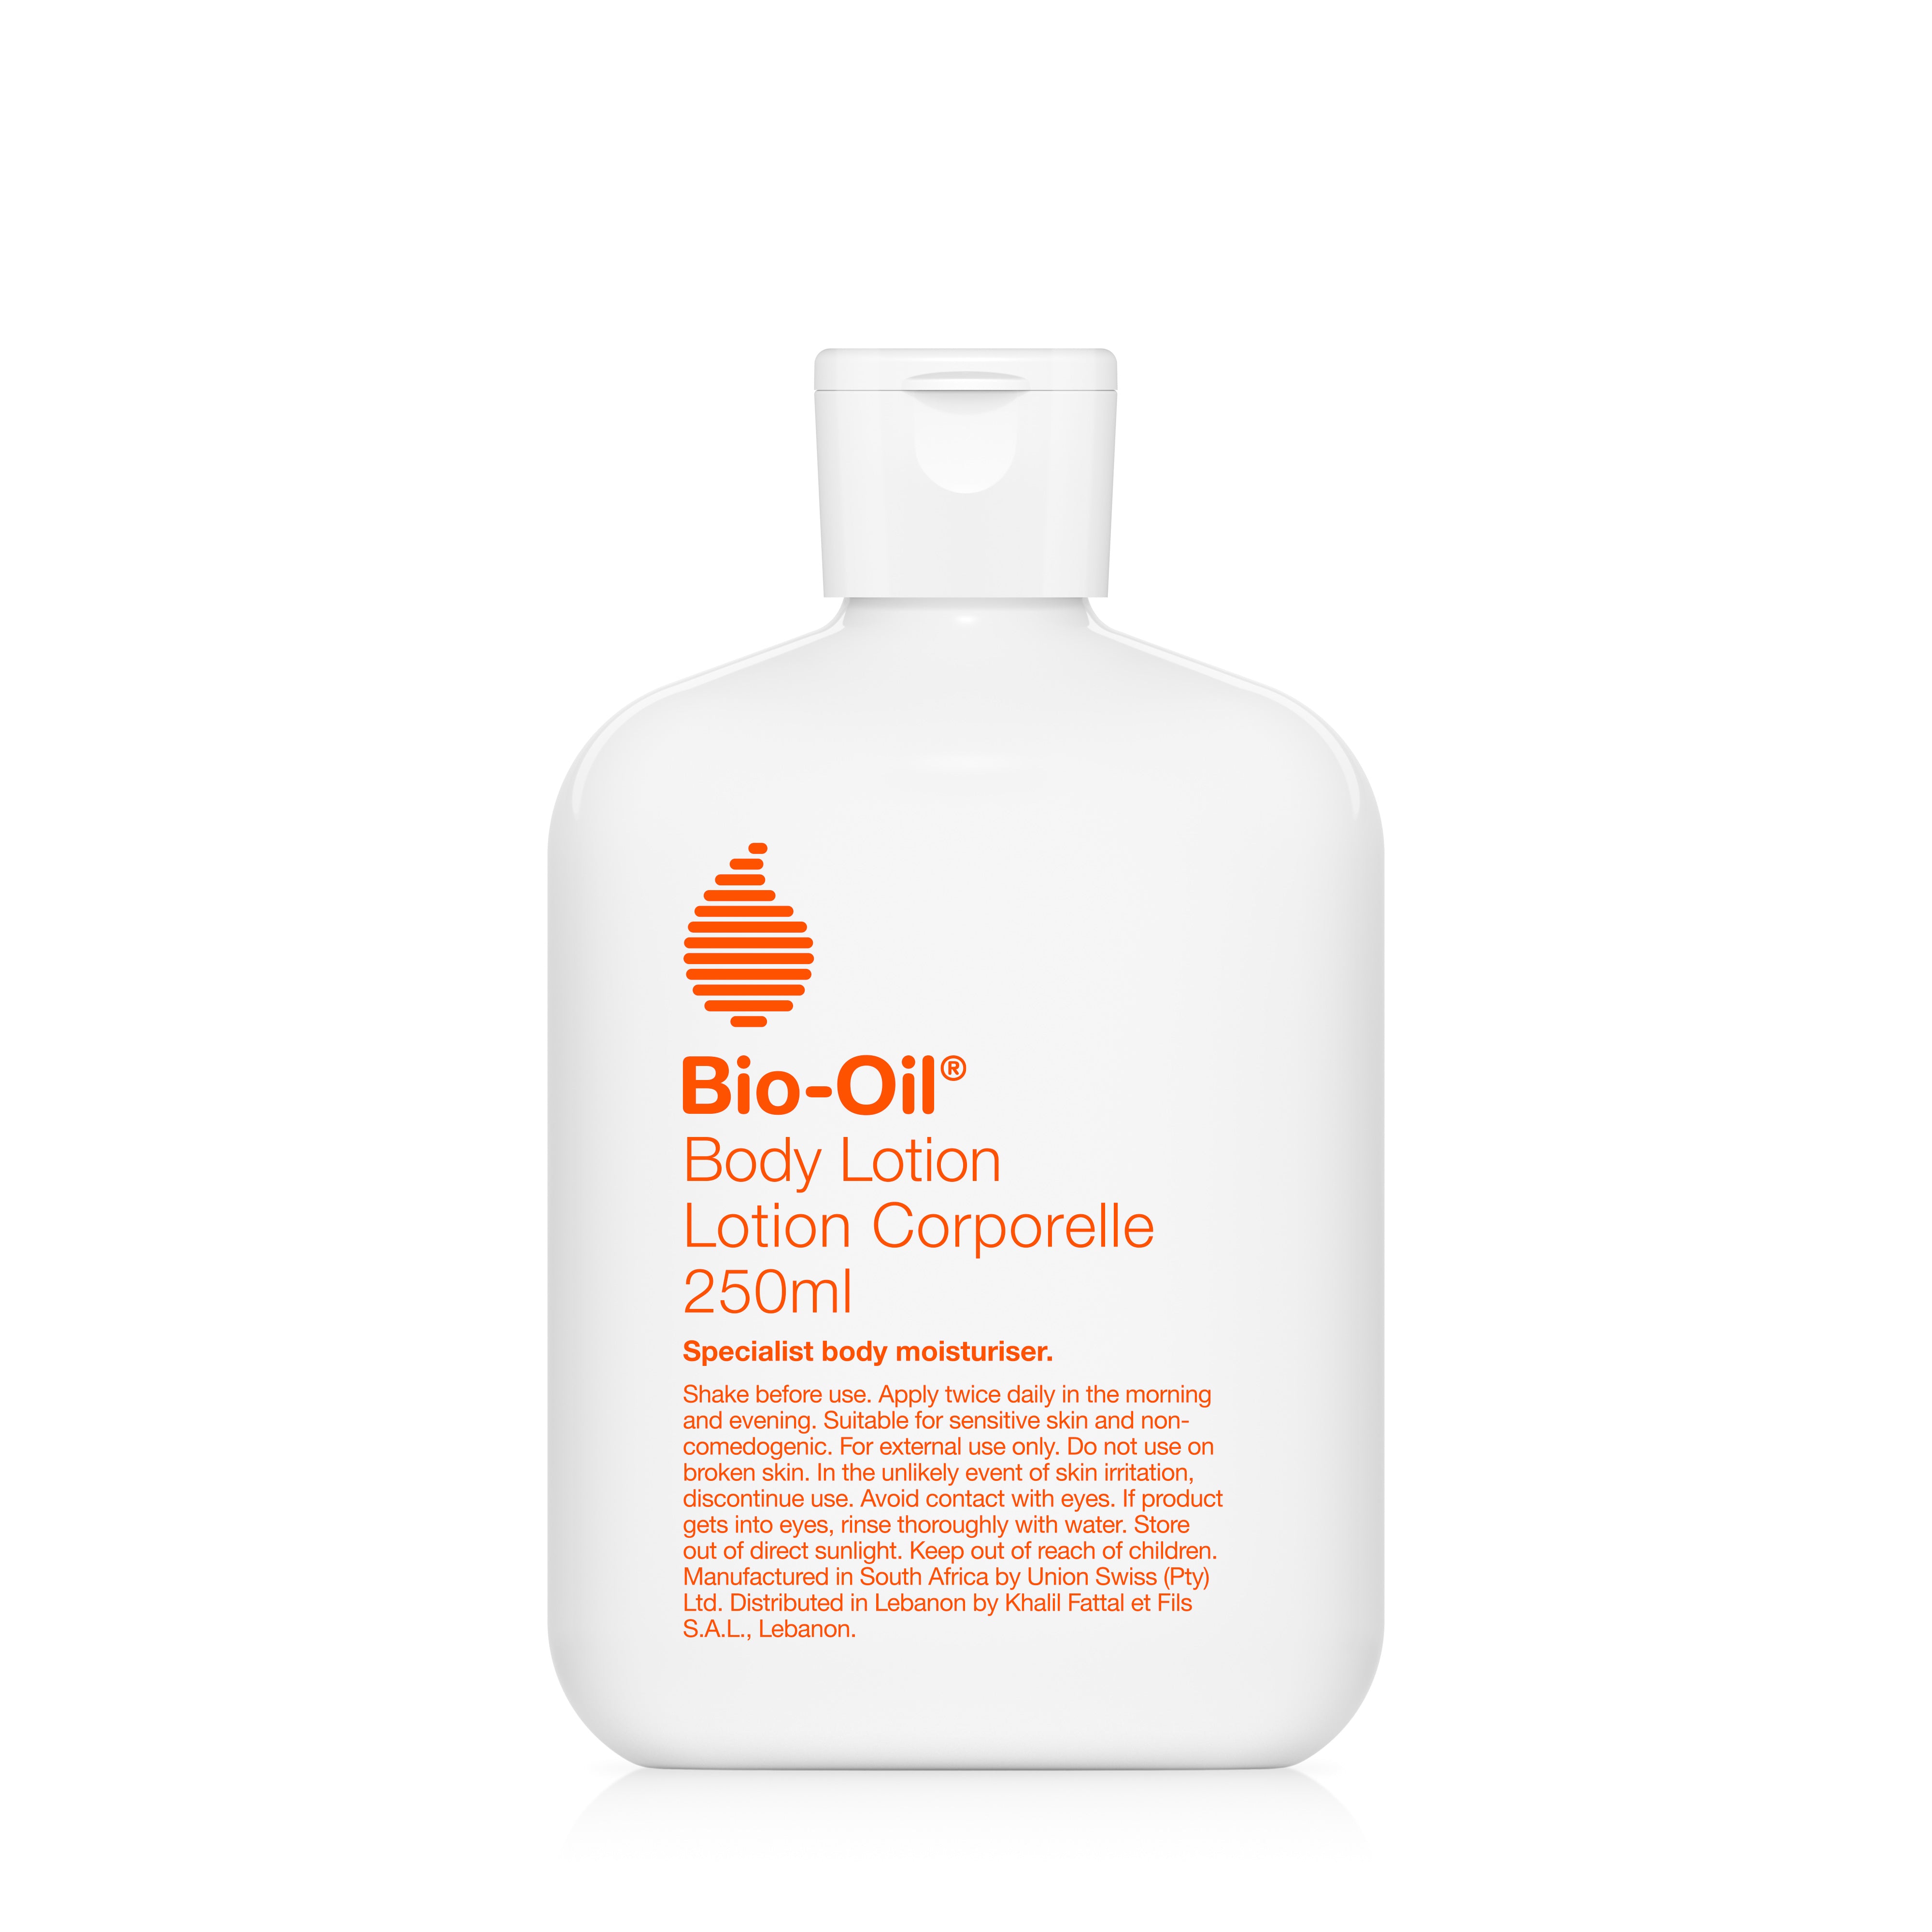 Bio-Oil Jelly Dry Skin Gel –